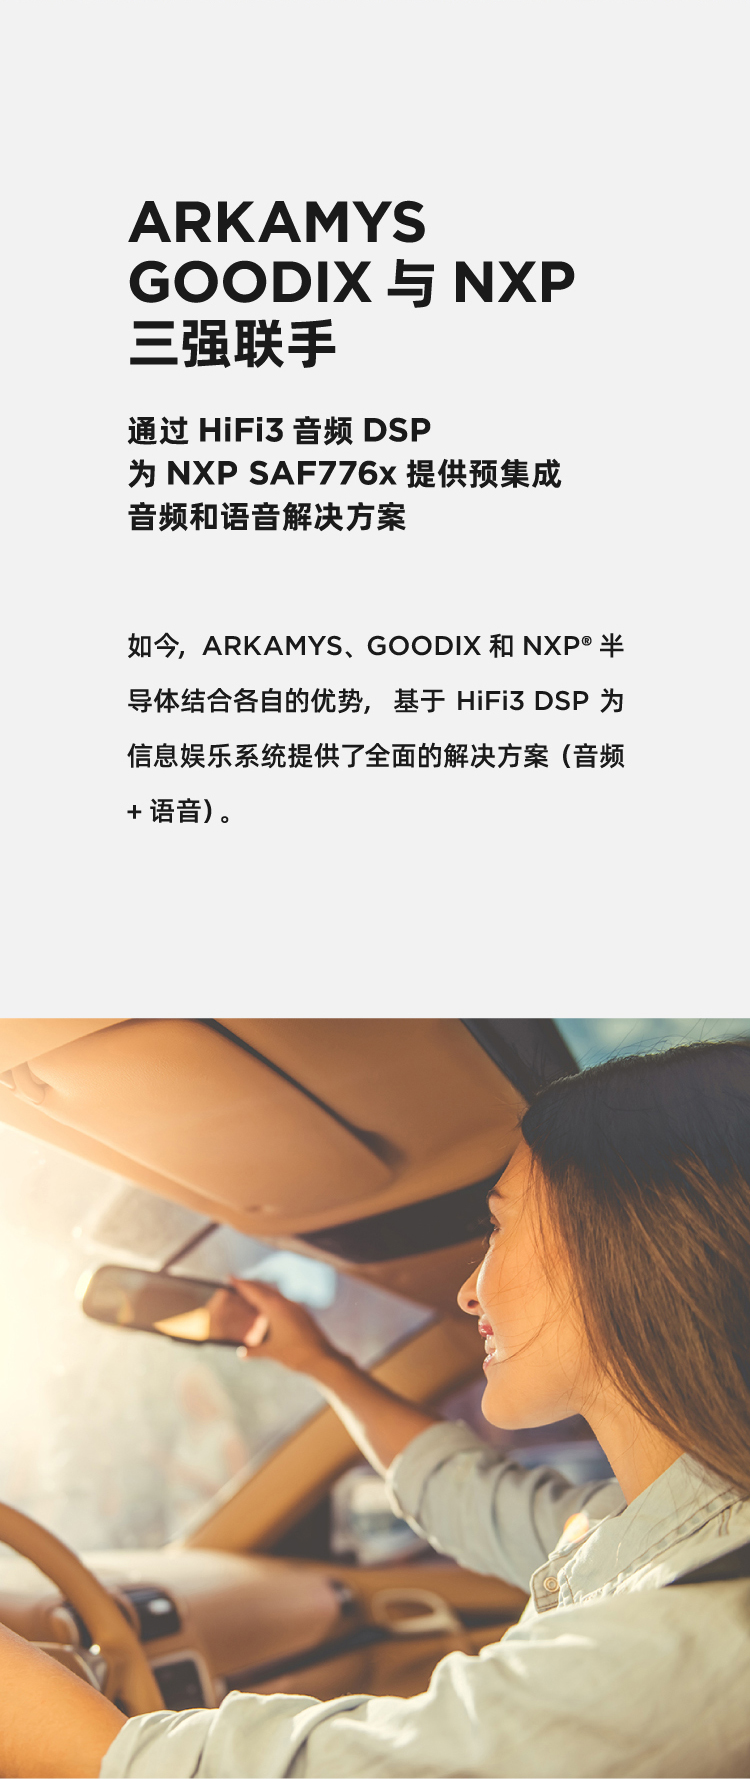 Arkamys_NXP_Goodix_PR_CN_Version3_02.jpg